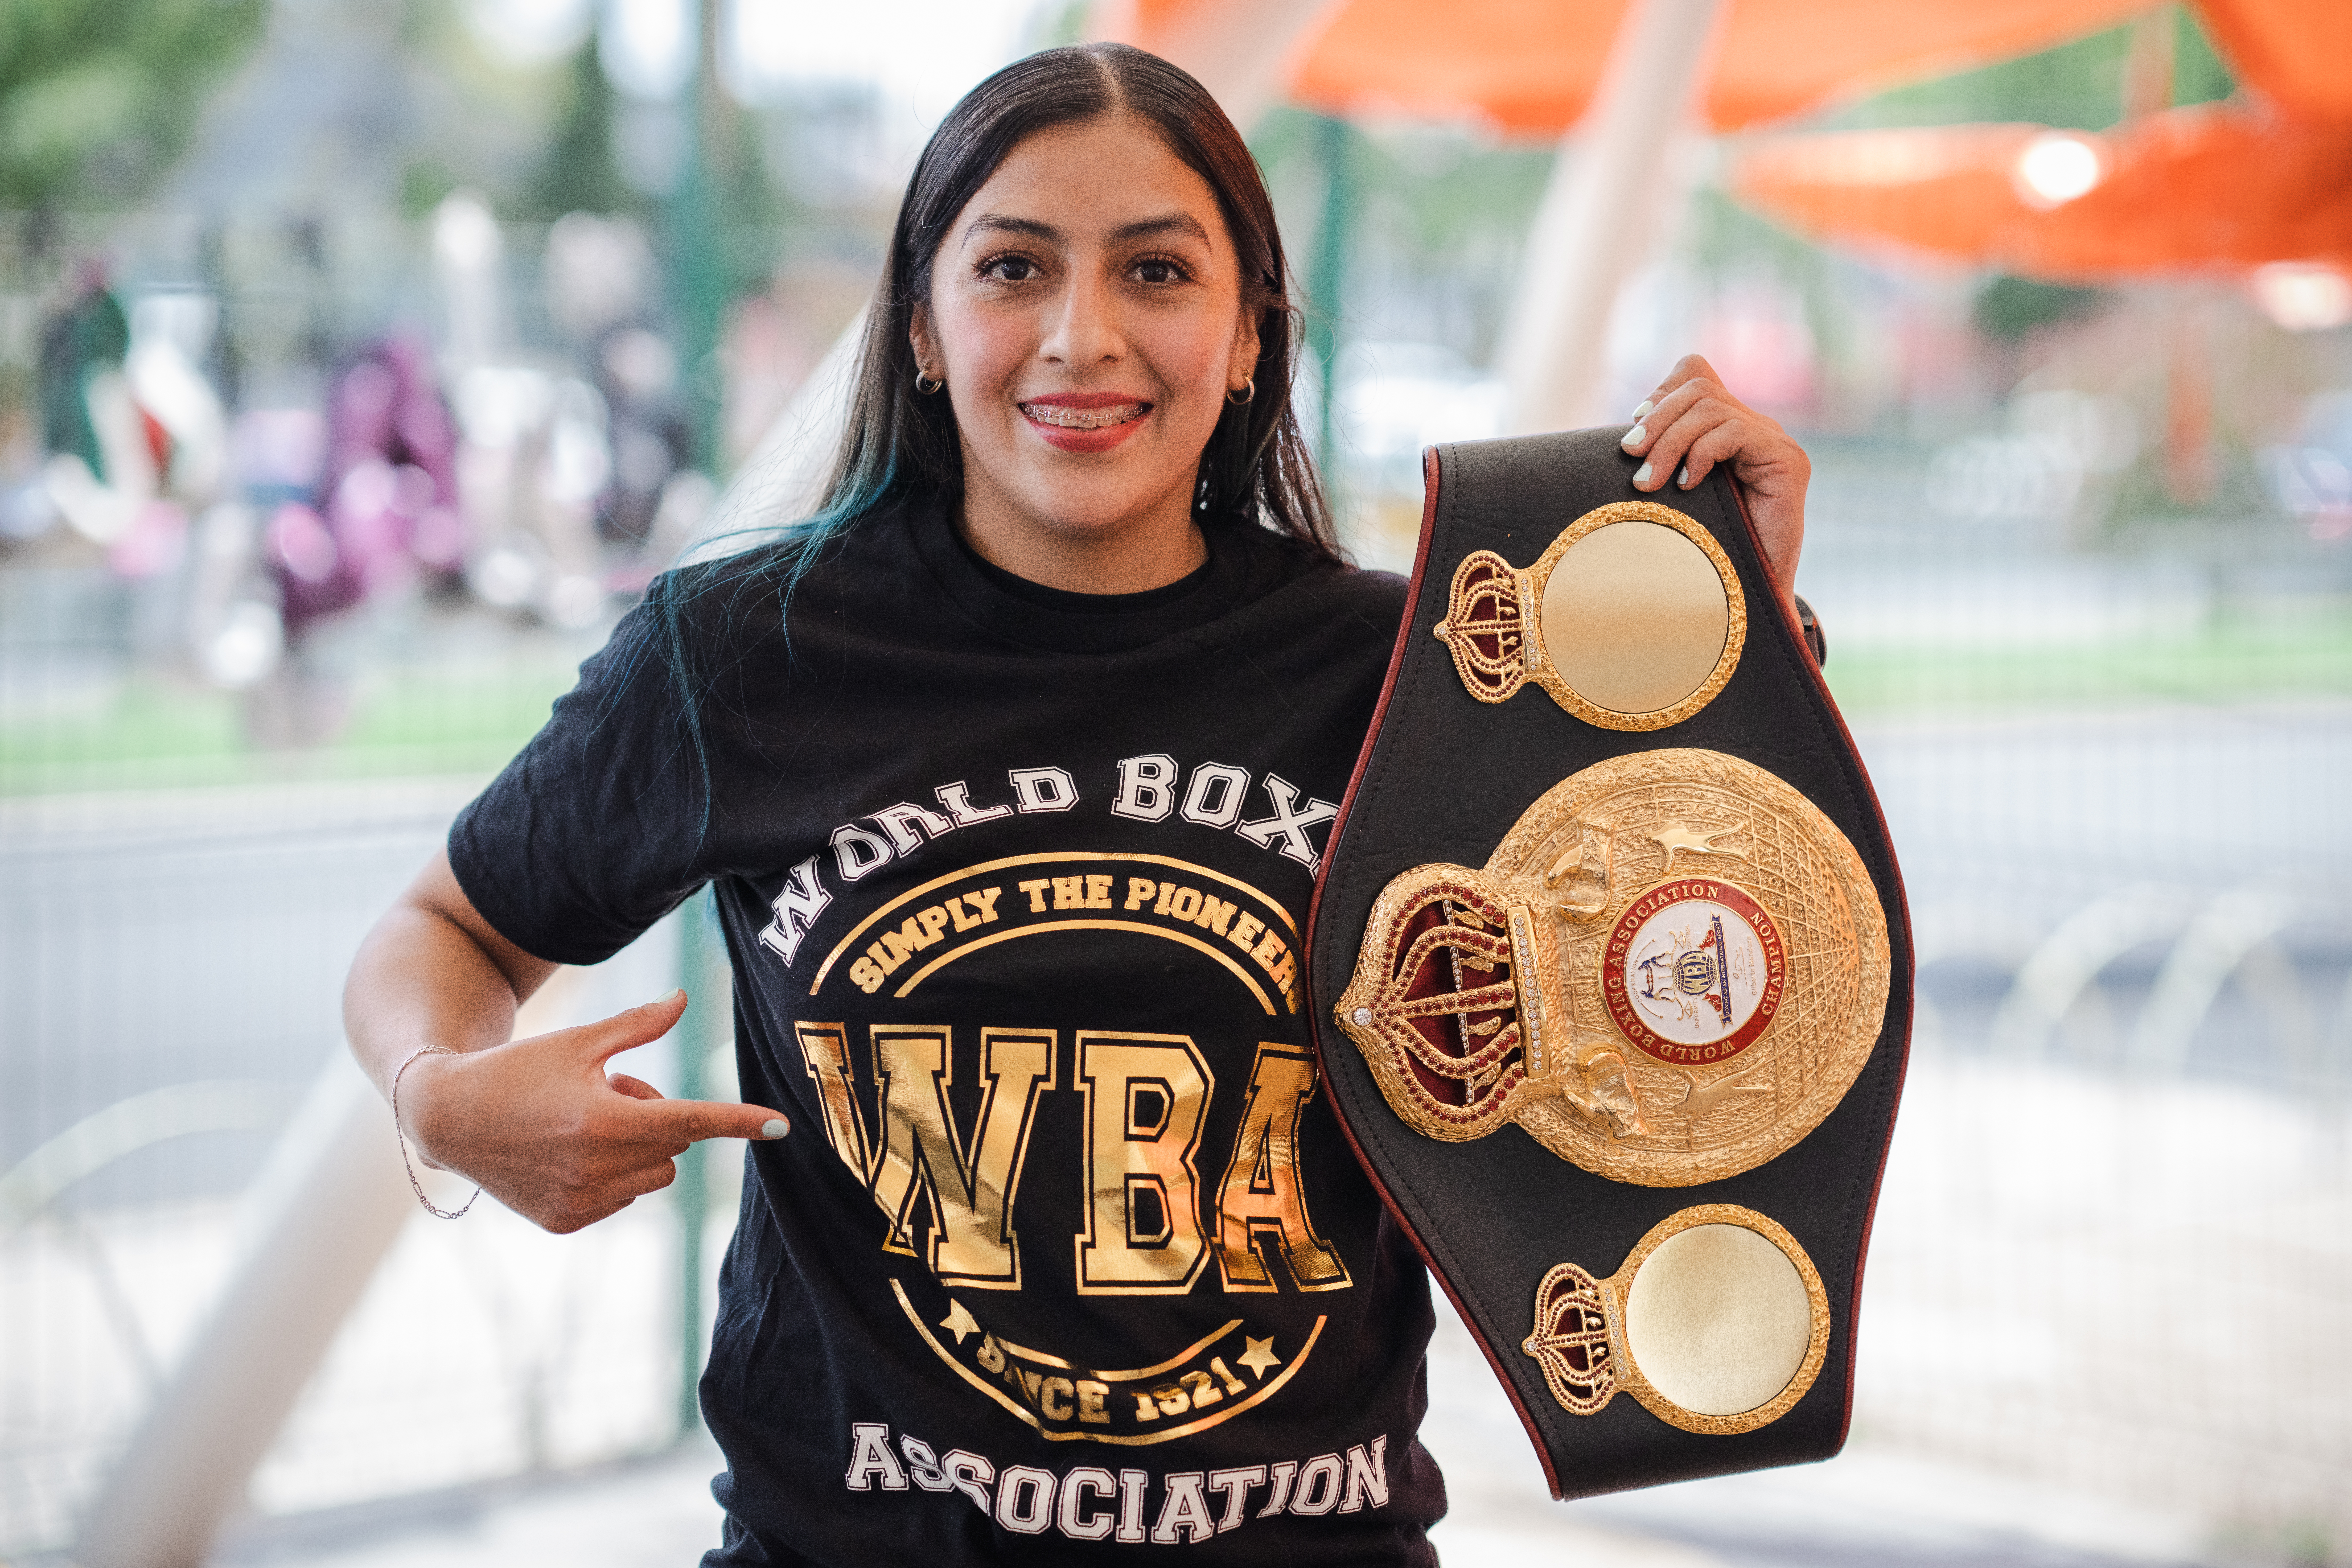 Jessica Nery Plata received her WBA belt